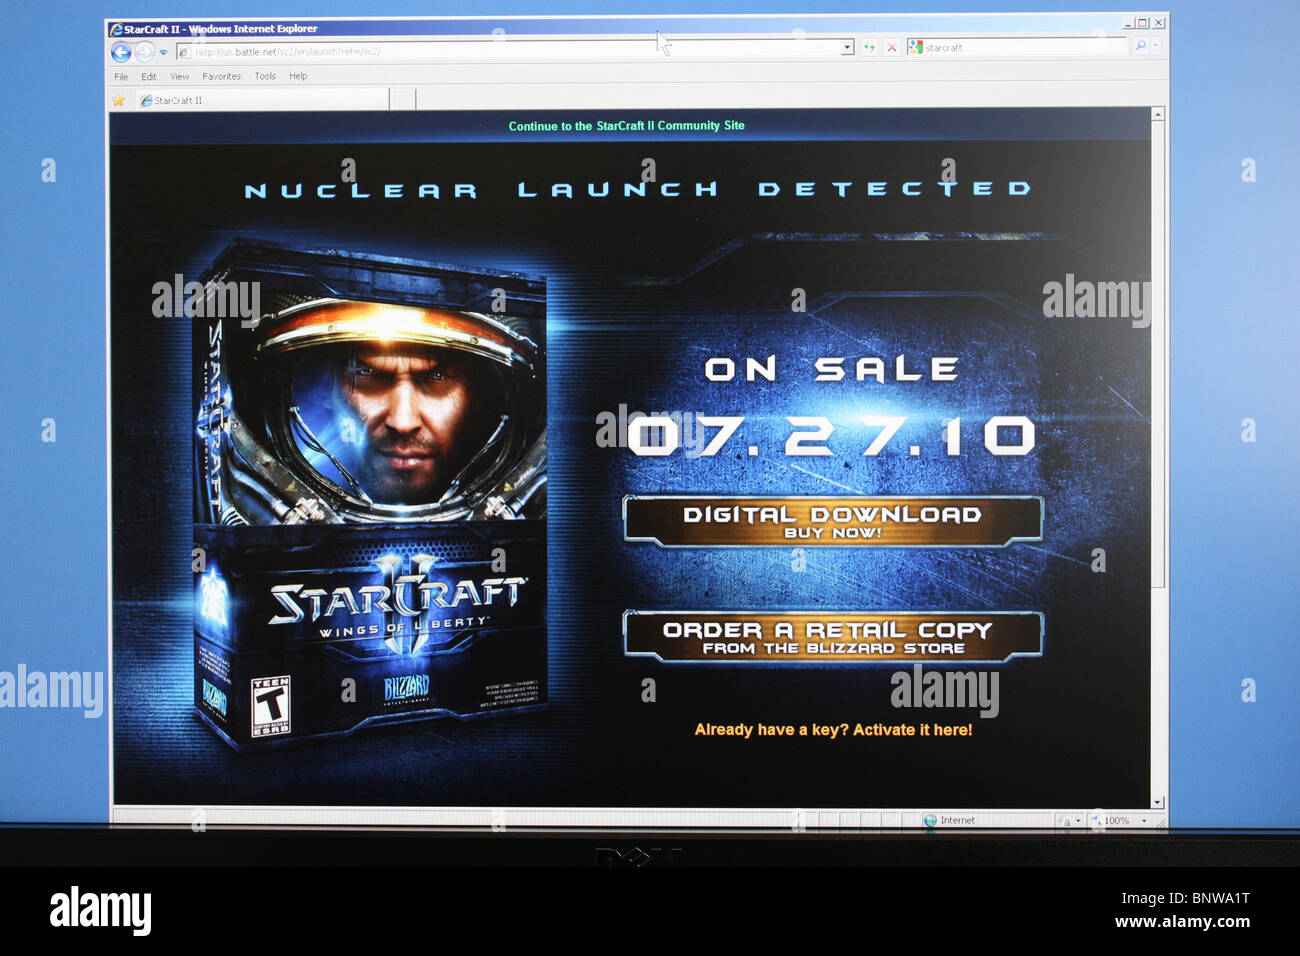 starcraft online computer game Stock Photo